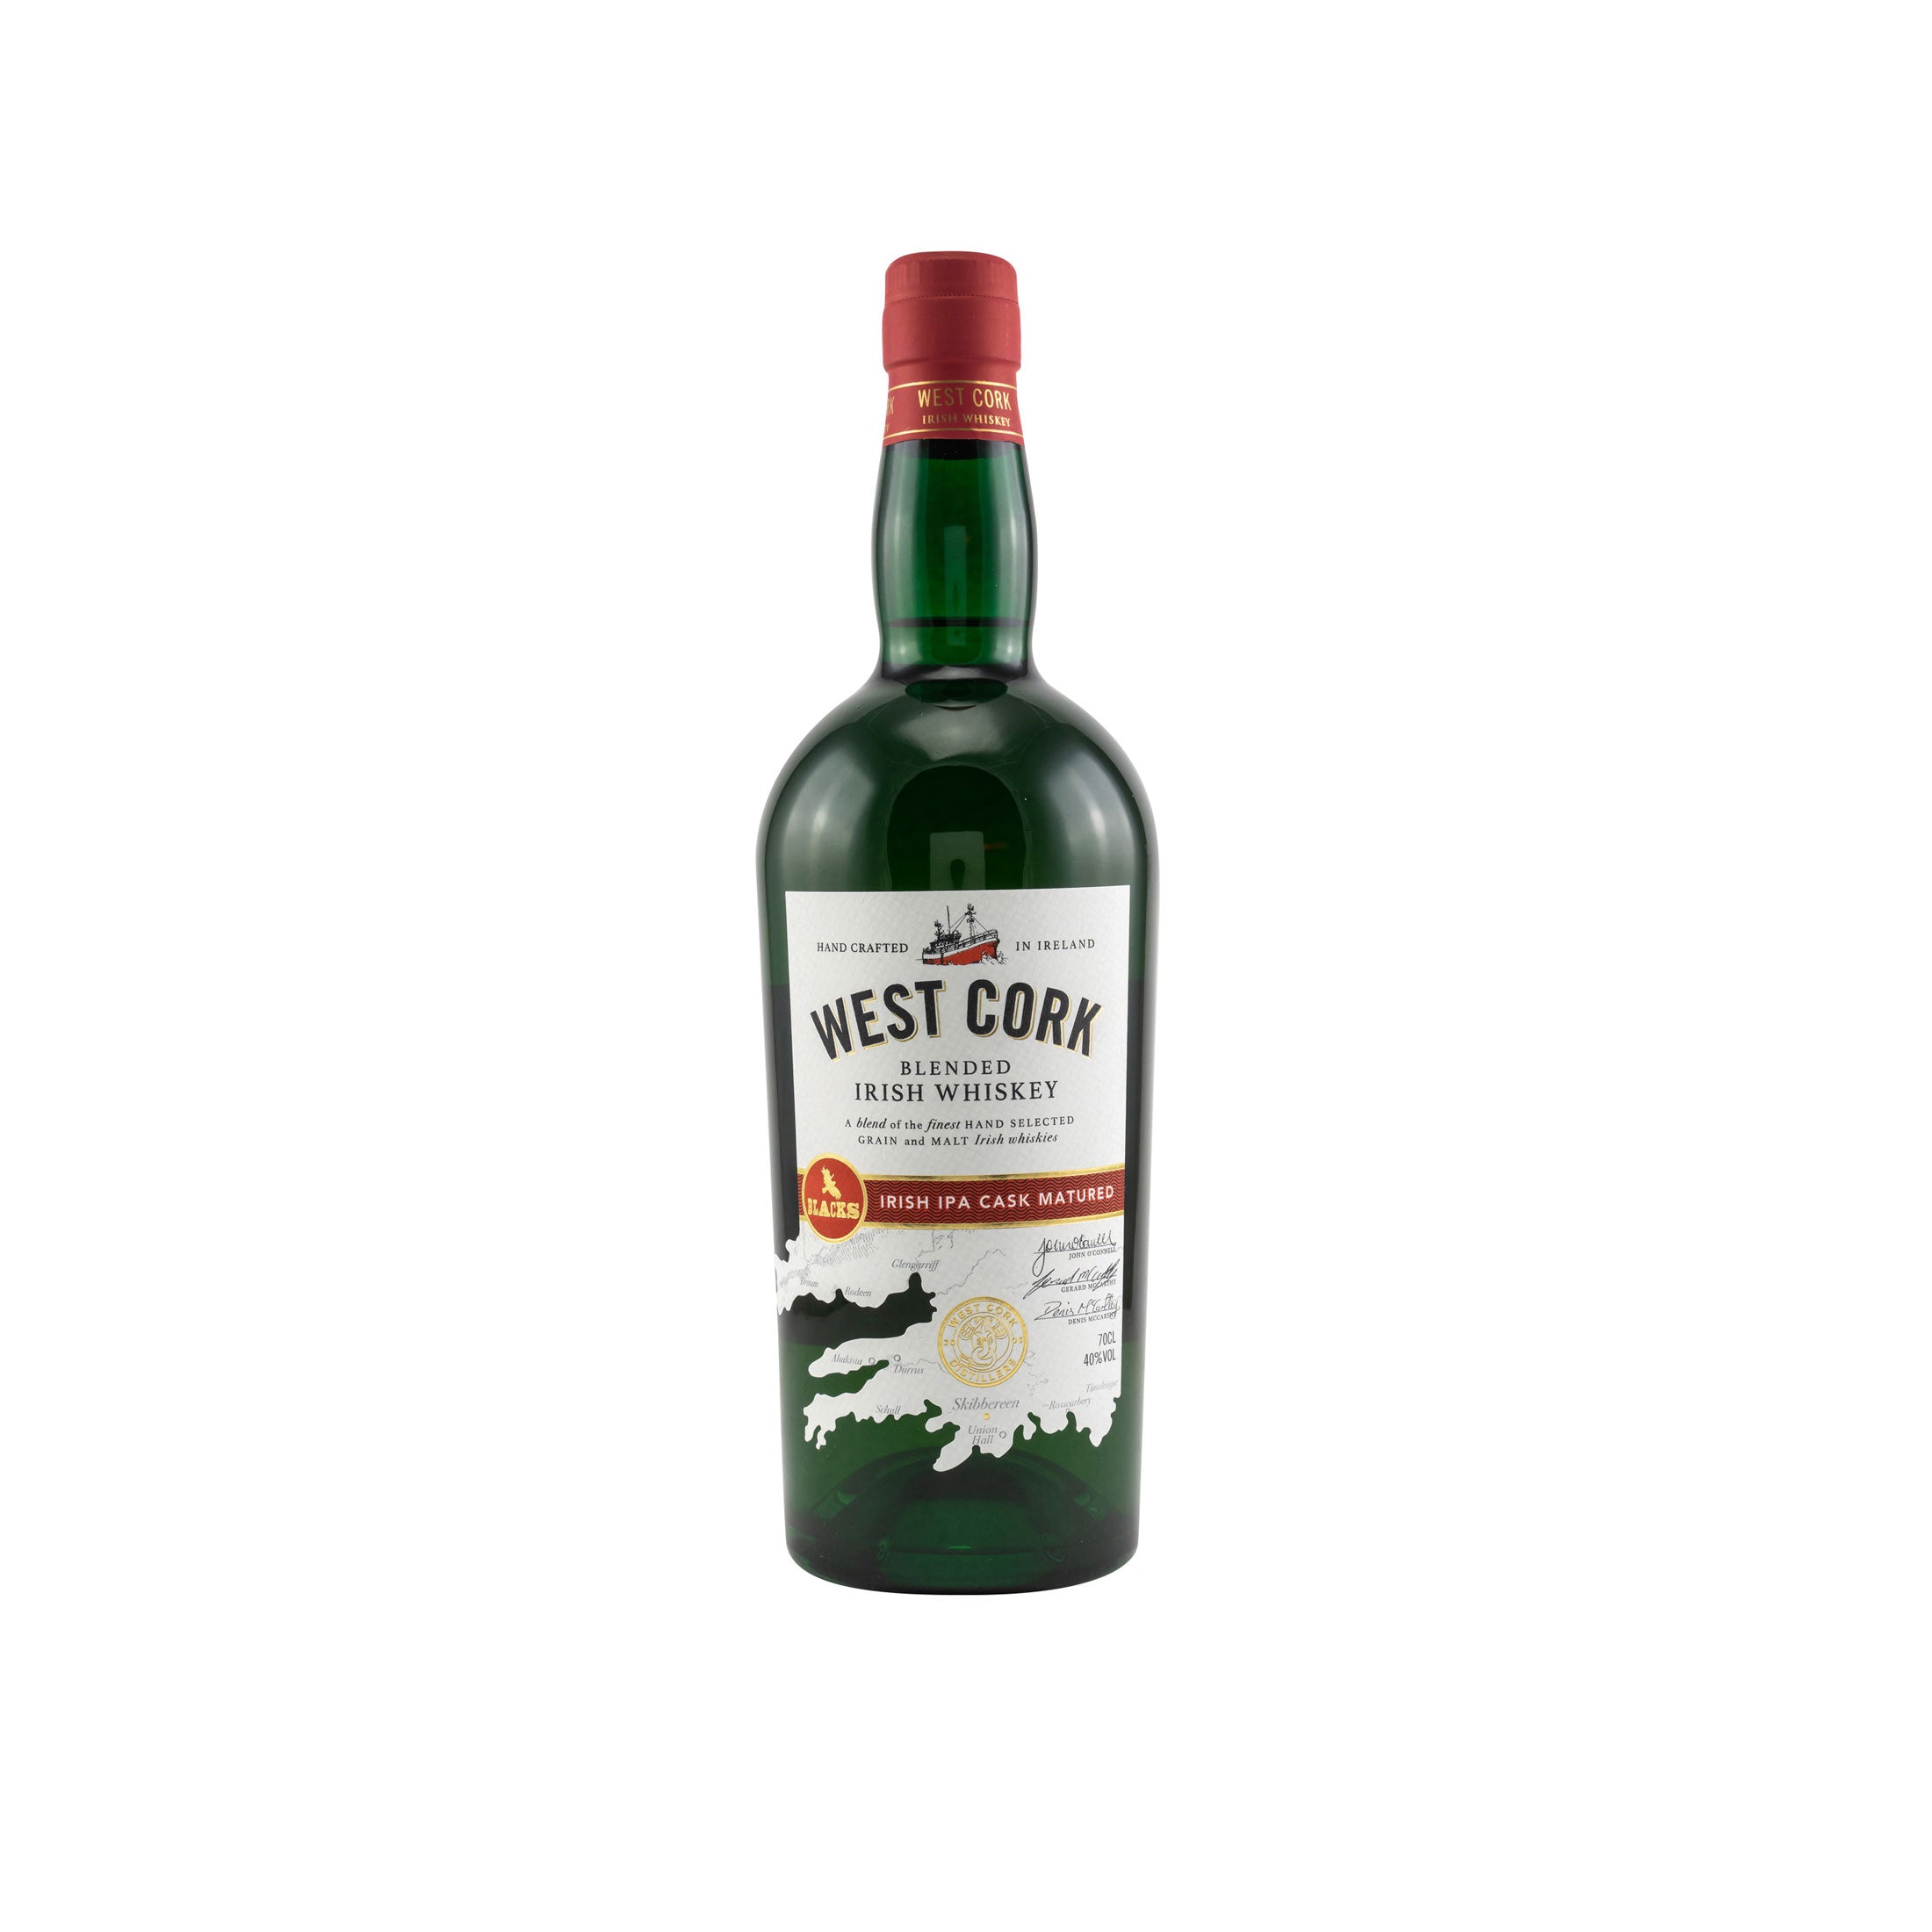 West Cork Blended Irish Whiskey IPA Cask Matured